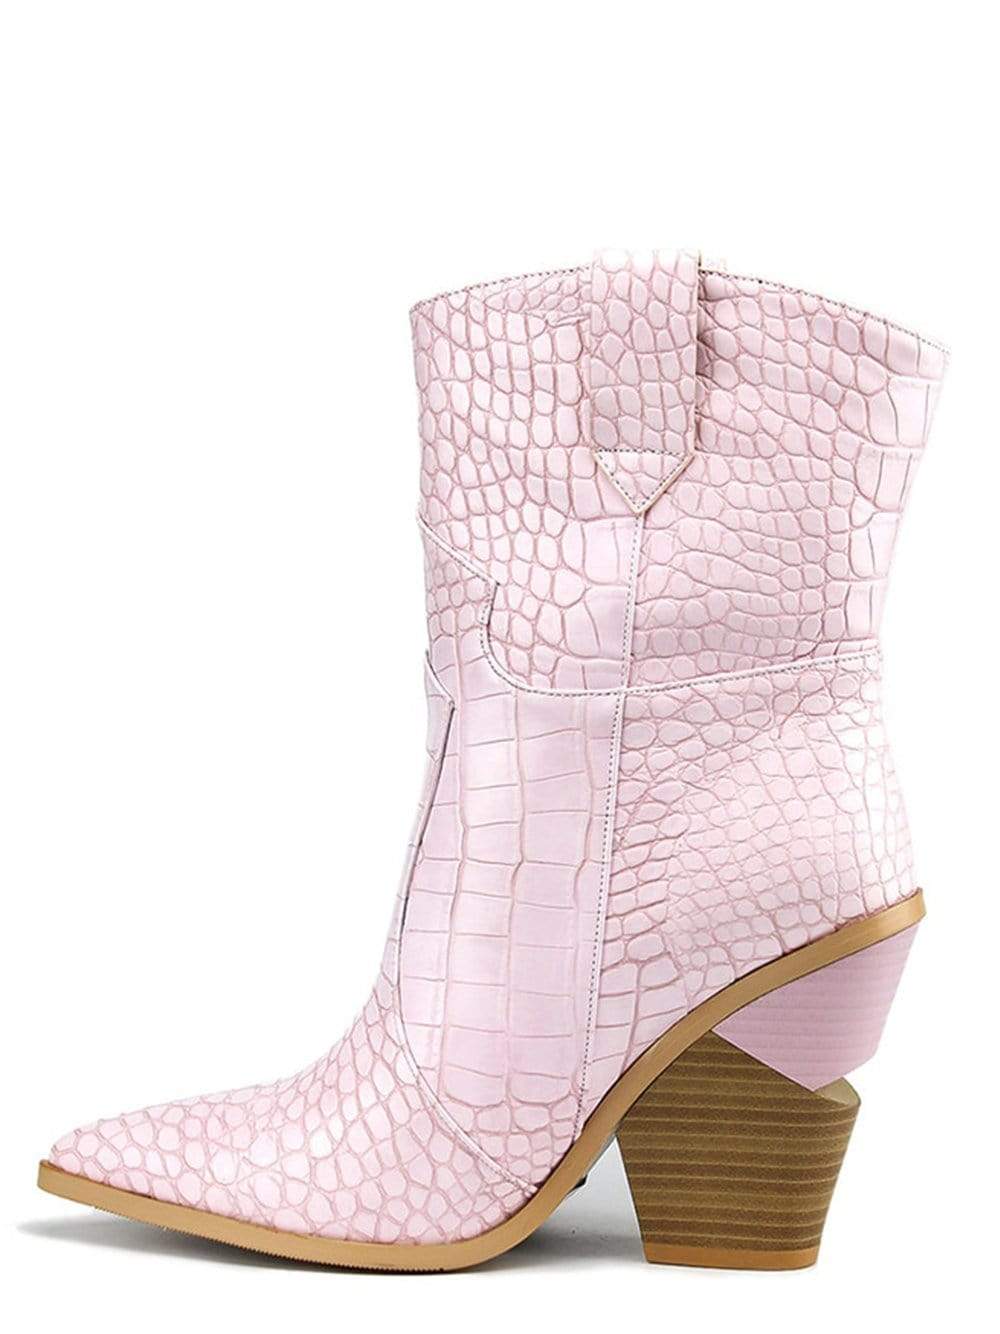 Cutwalk Mid Boot in Pink